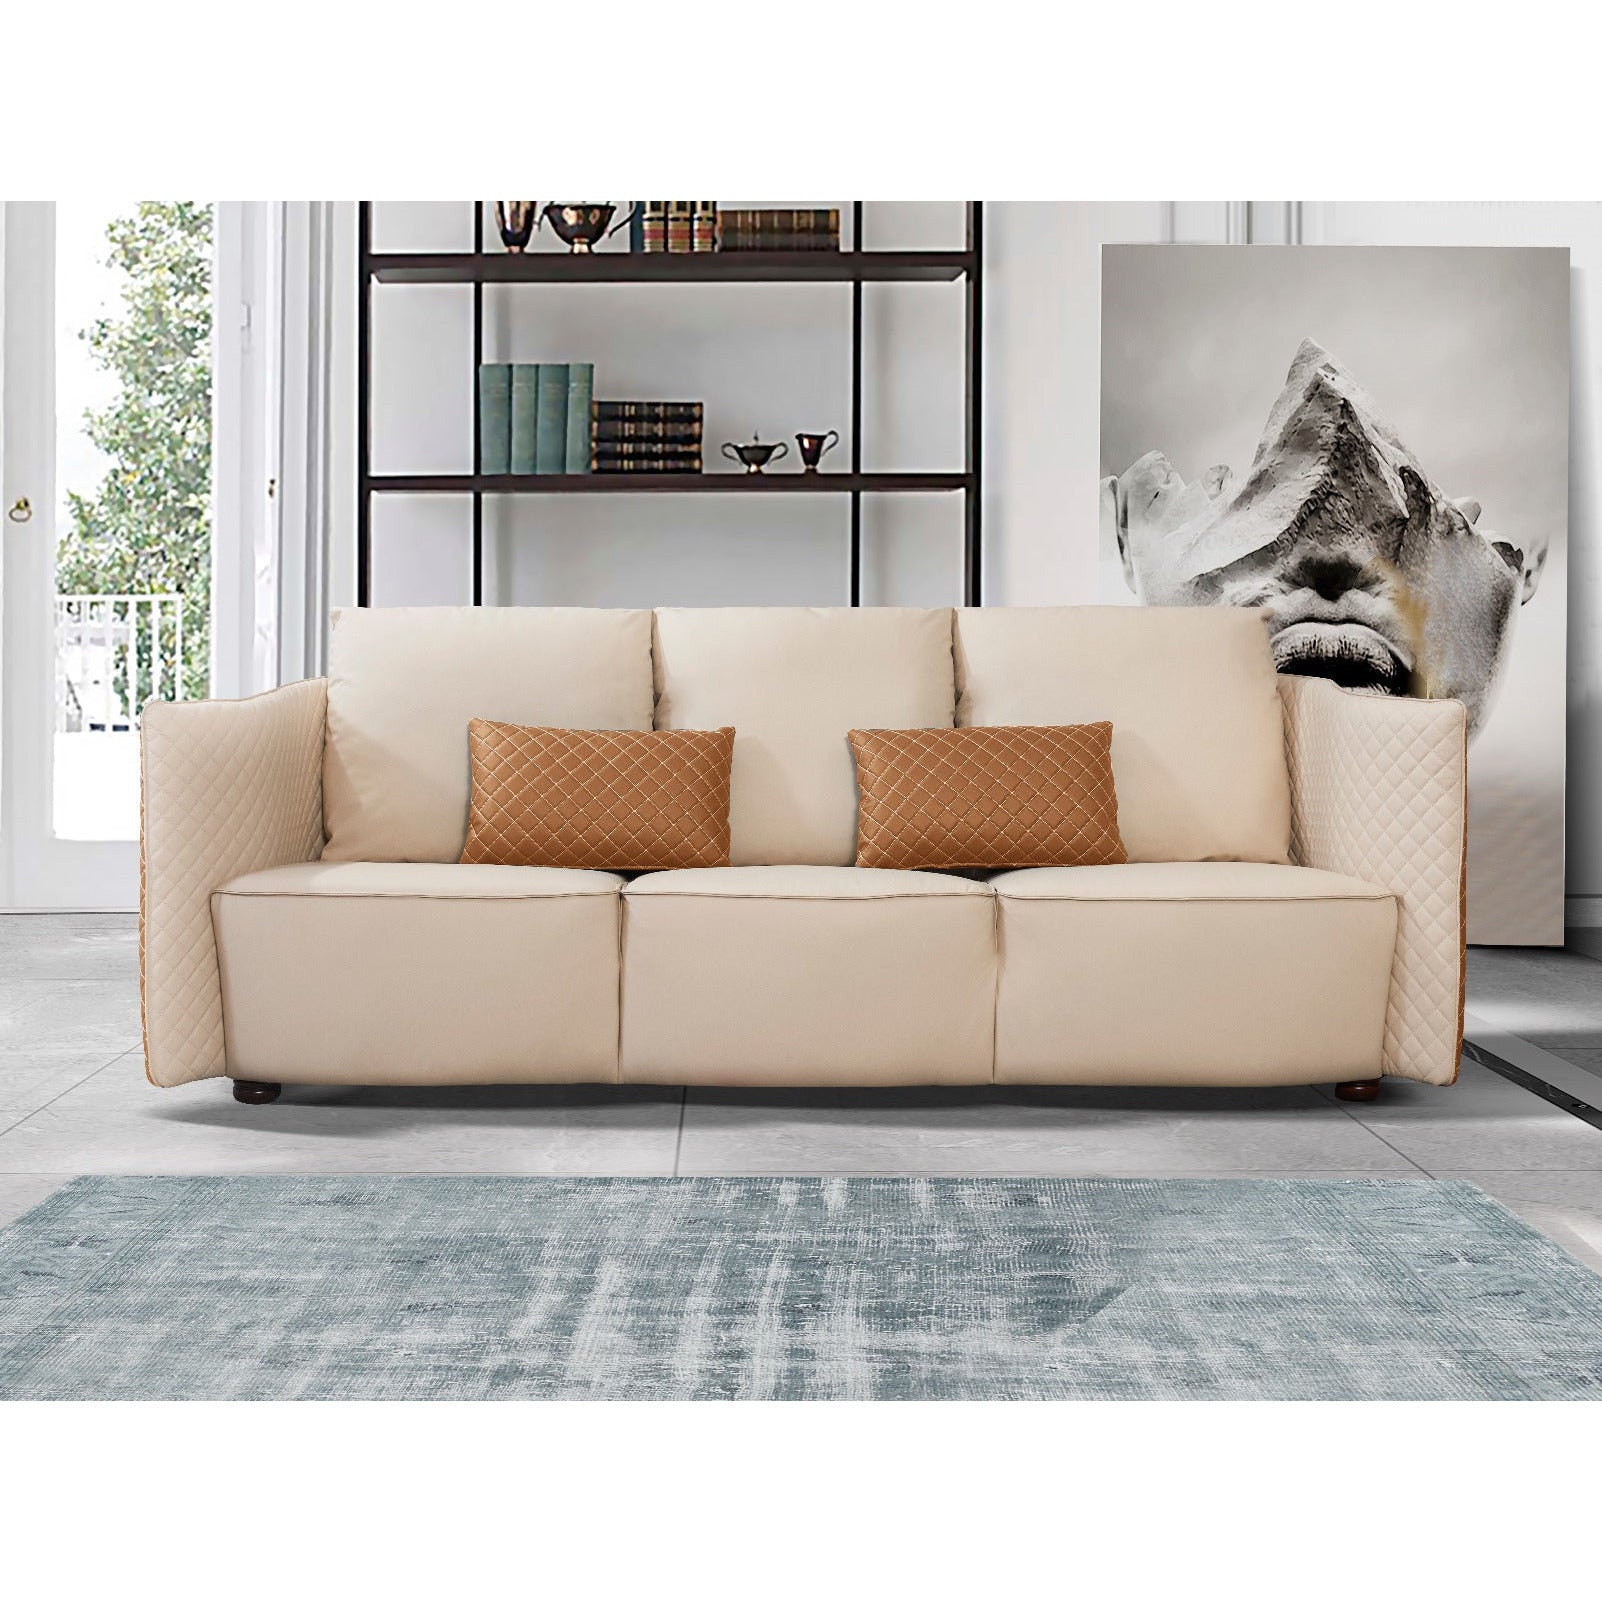 European Furniture - Makassar 2 Piece Living Room Set in Sand Beige & Orange - 52552-2SET - New Star Living